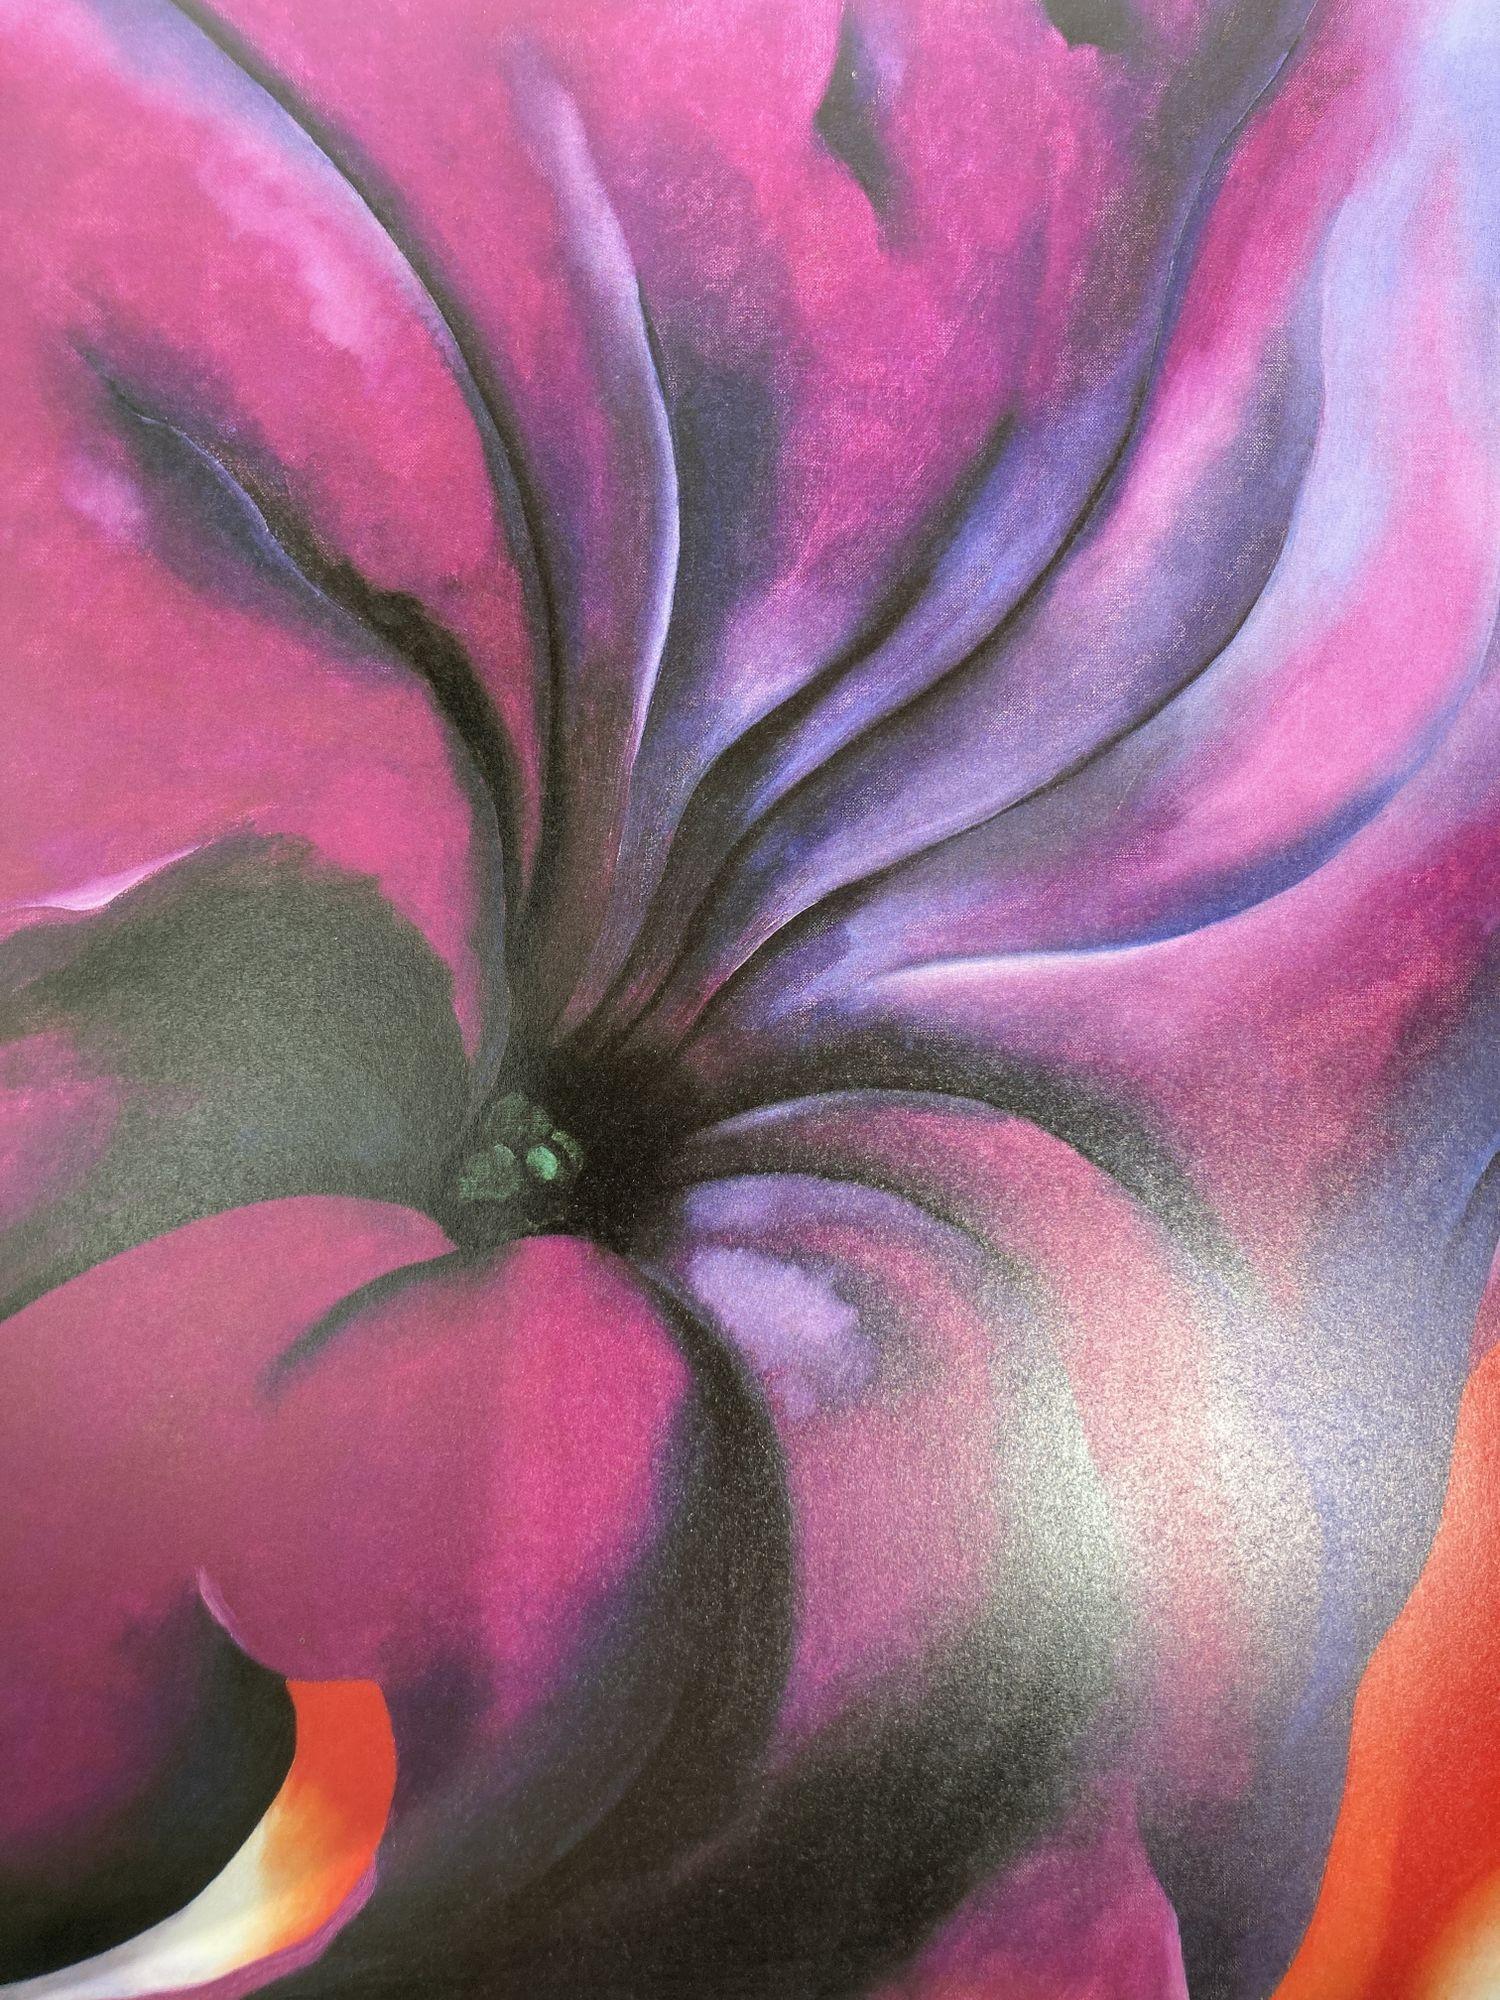 Georgia O'Keeffe One Hundred Flowers Coffee Table Hardcover Art Book 1987 4